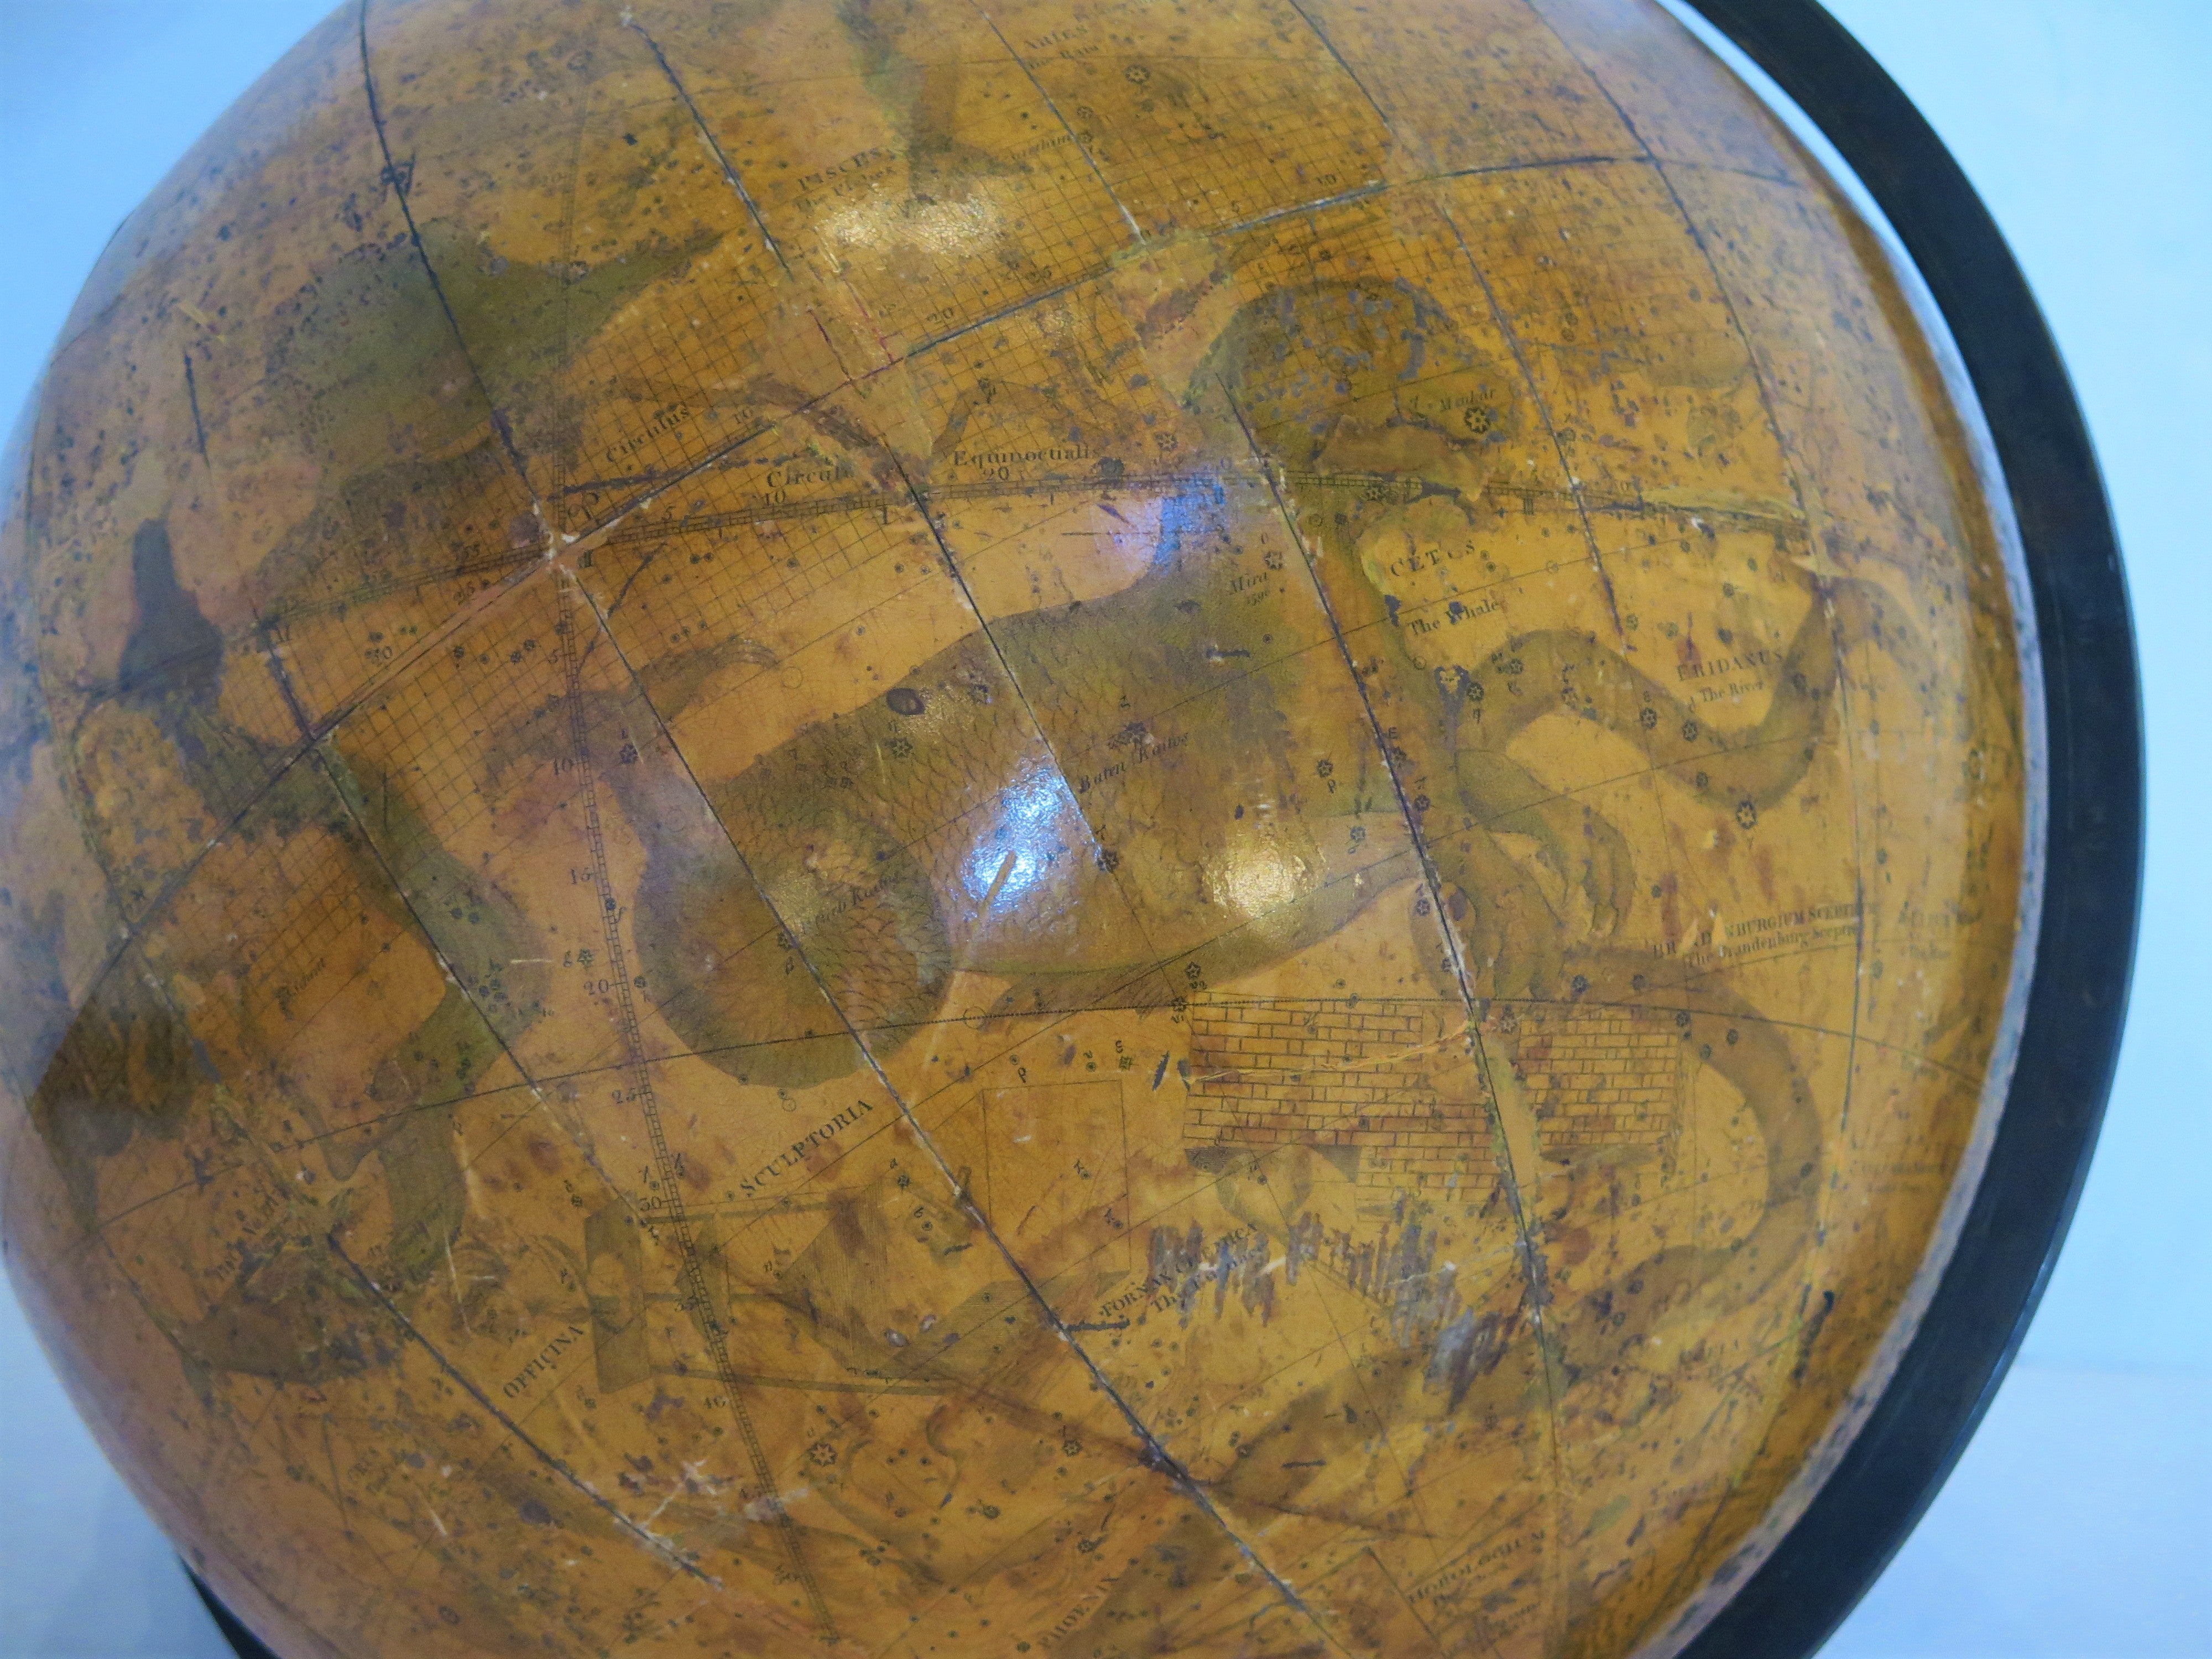 George III Eighteen Inch Celestial Globe by W. and T.M. Bardin, 1800